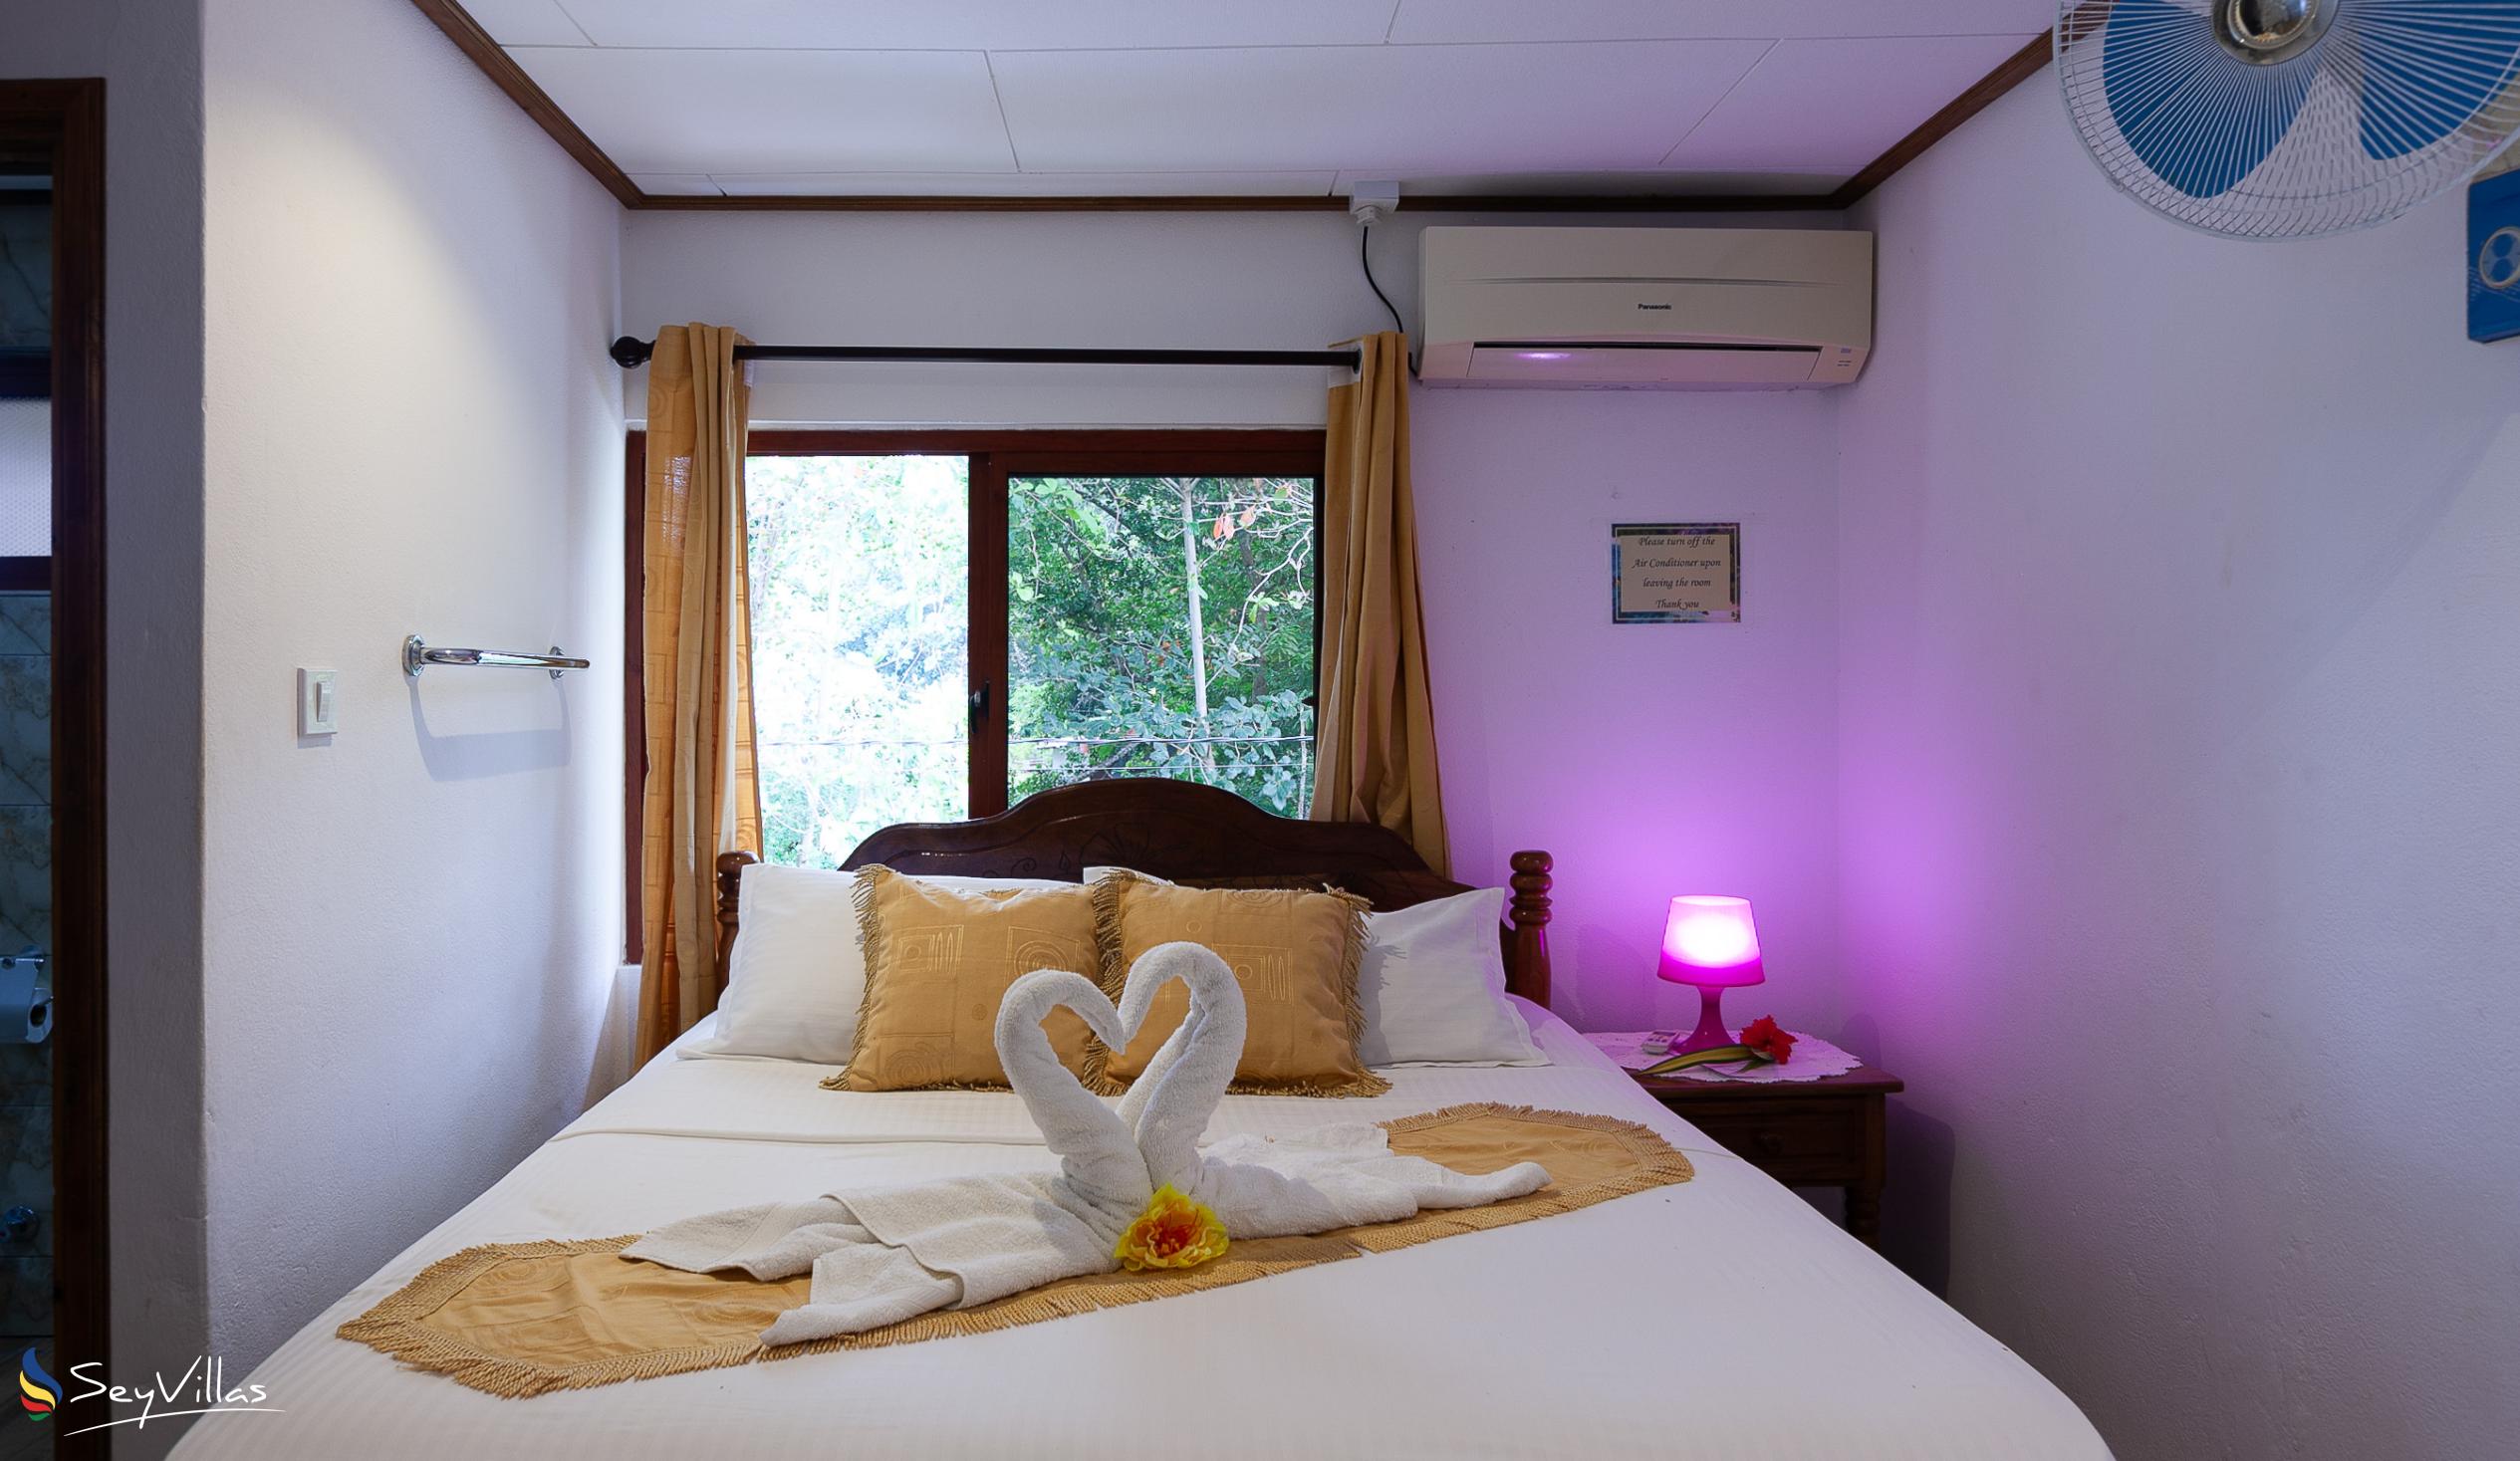 Photo 85: Tannette's Villa - Standard Queen Room - La Digue (Seychelles)